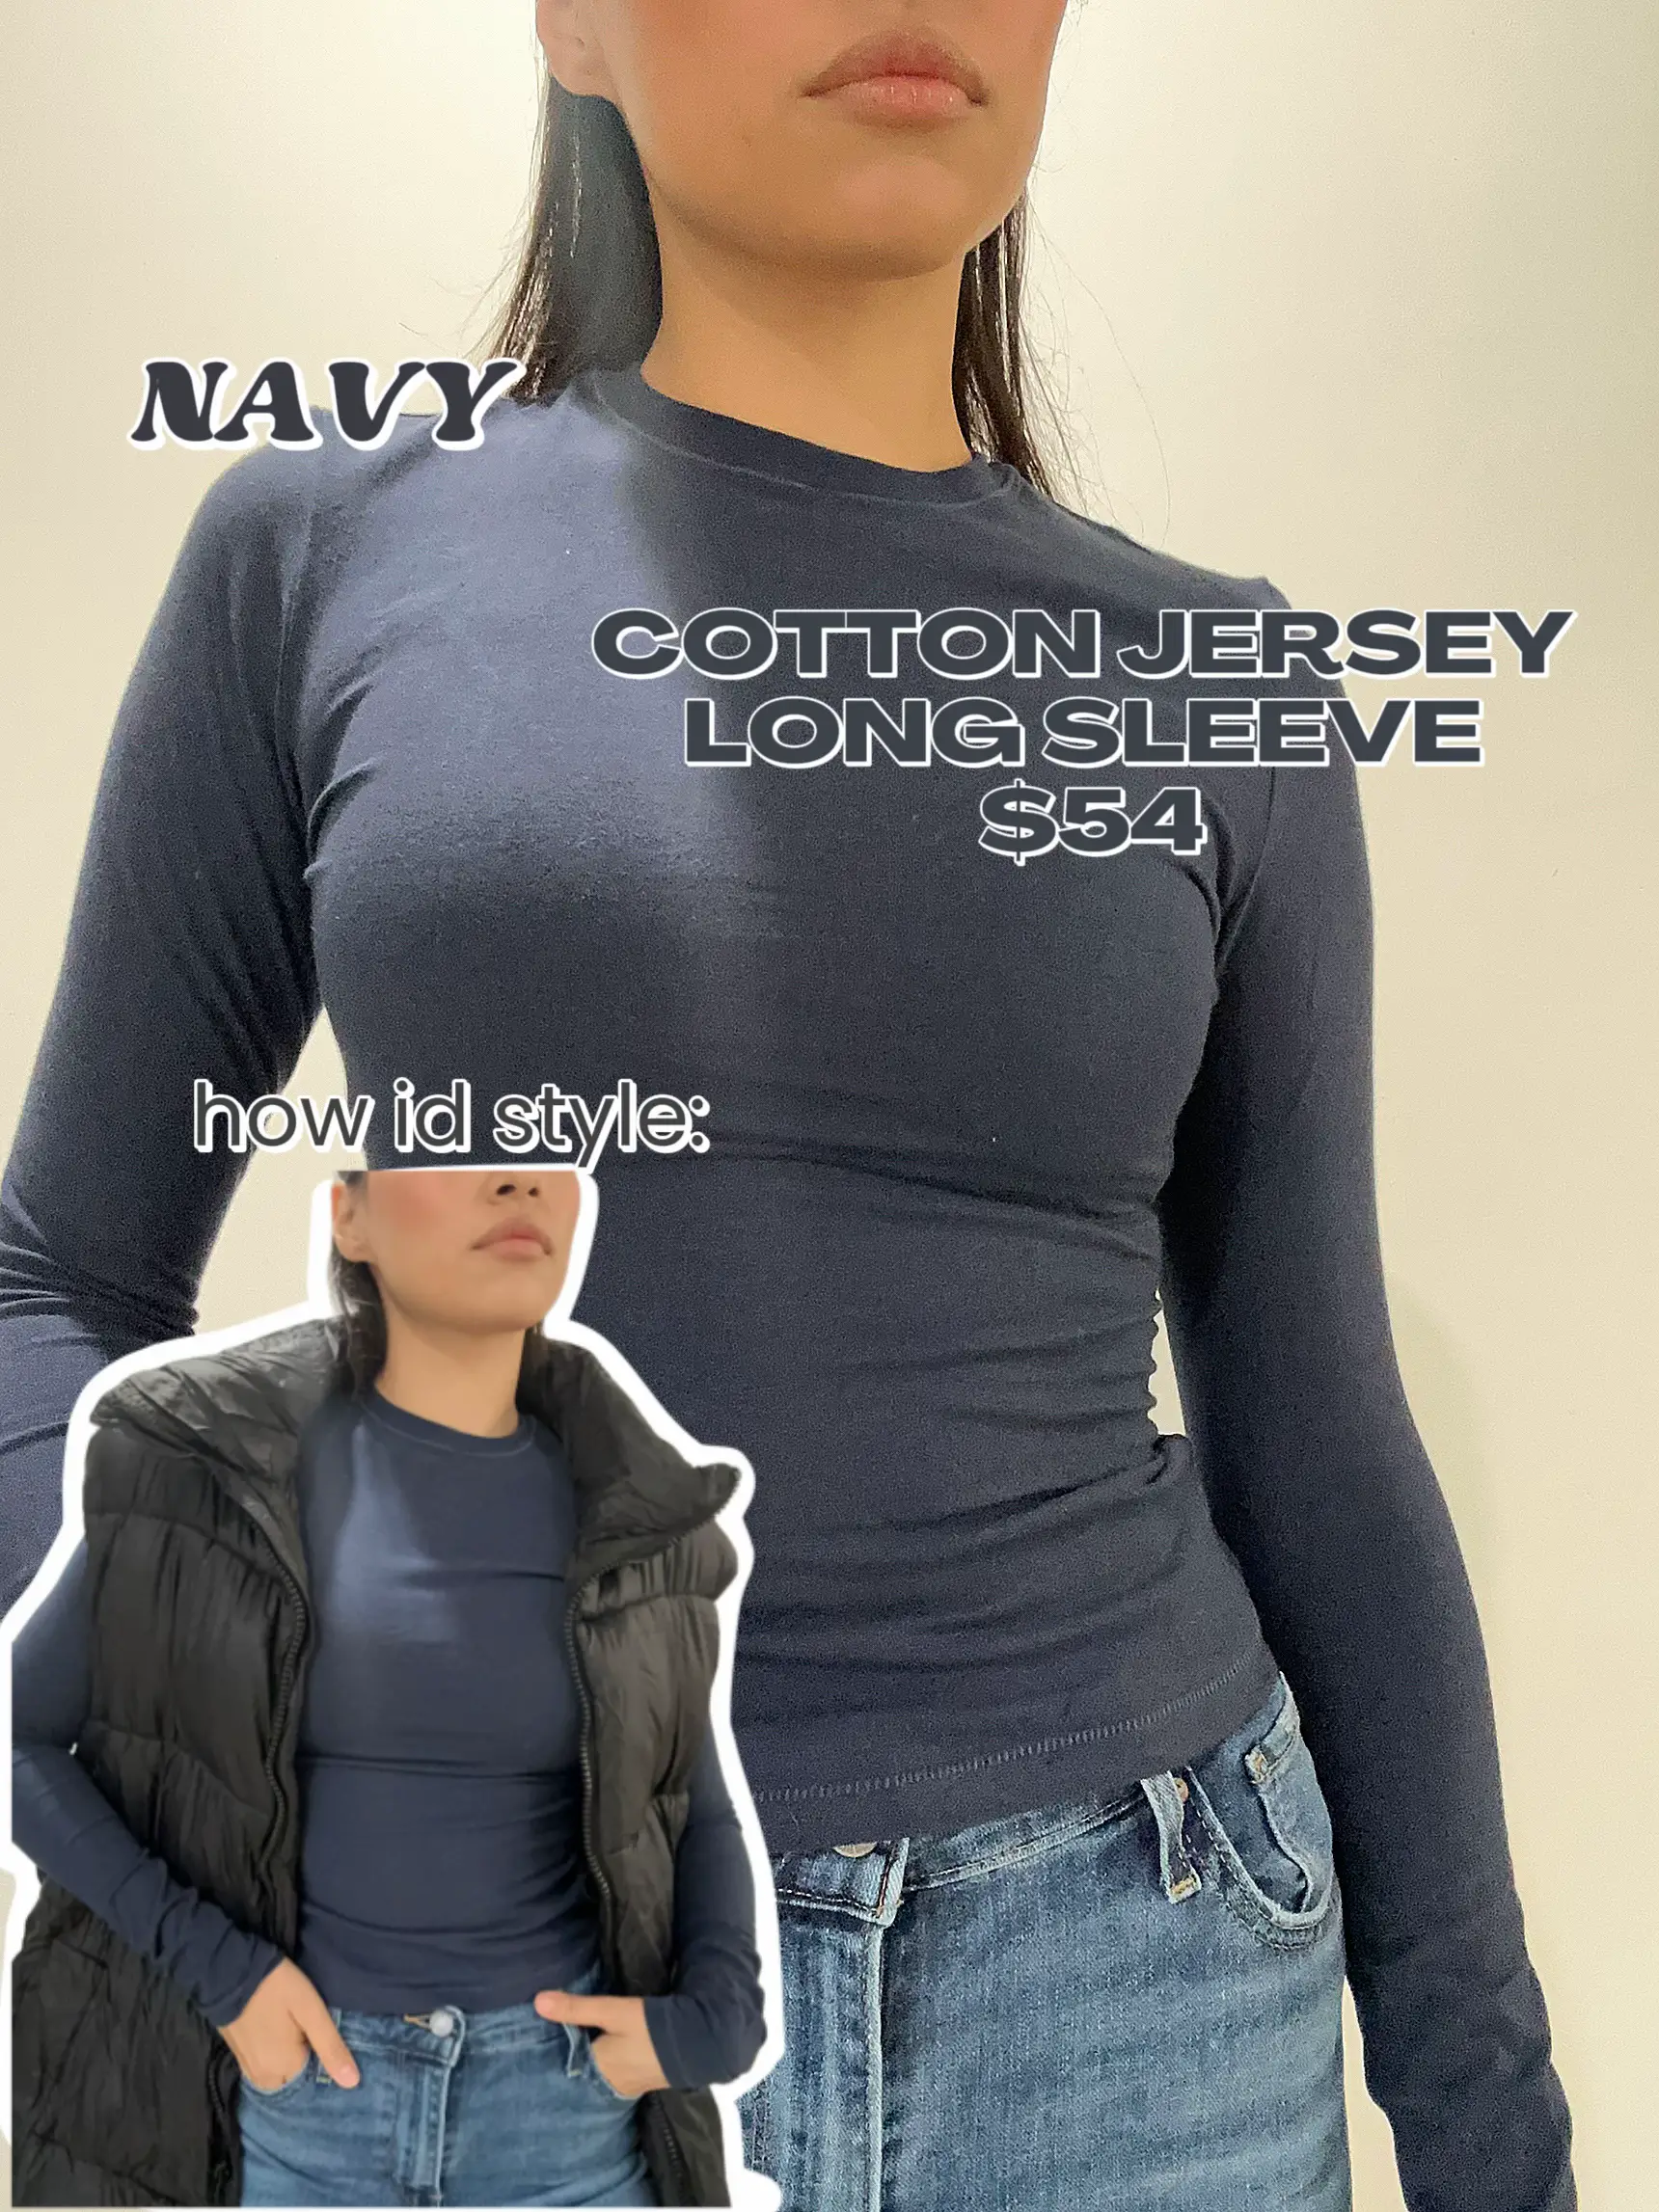 skims Cotton Jersey Long Sleeve T-Shirt - Light Grey, SKIMS